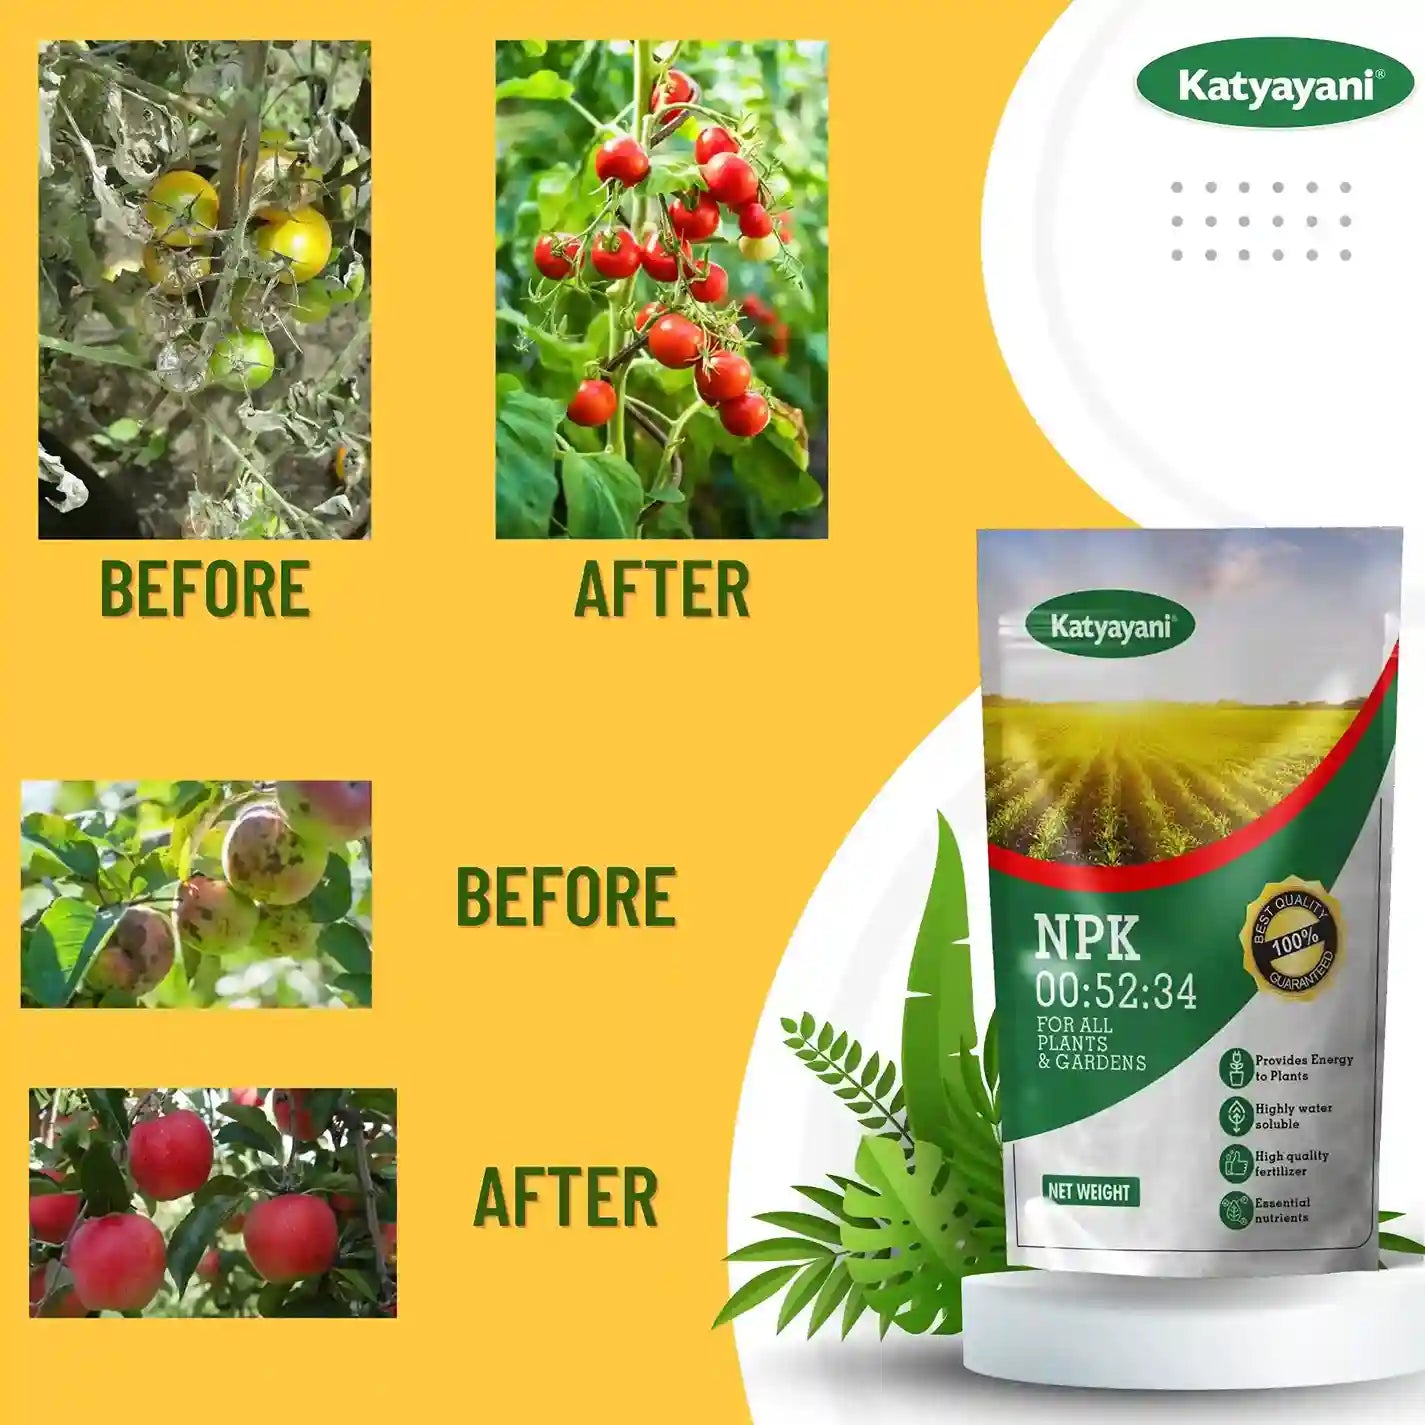 Katyayani NPK 00:52:34 | Fertilizer for home garden, flowers, vegetables